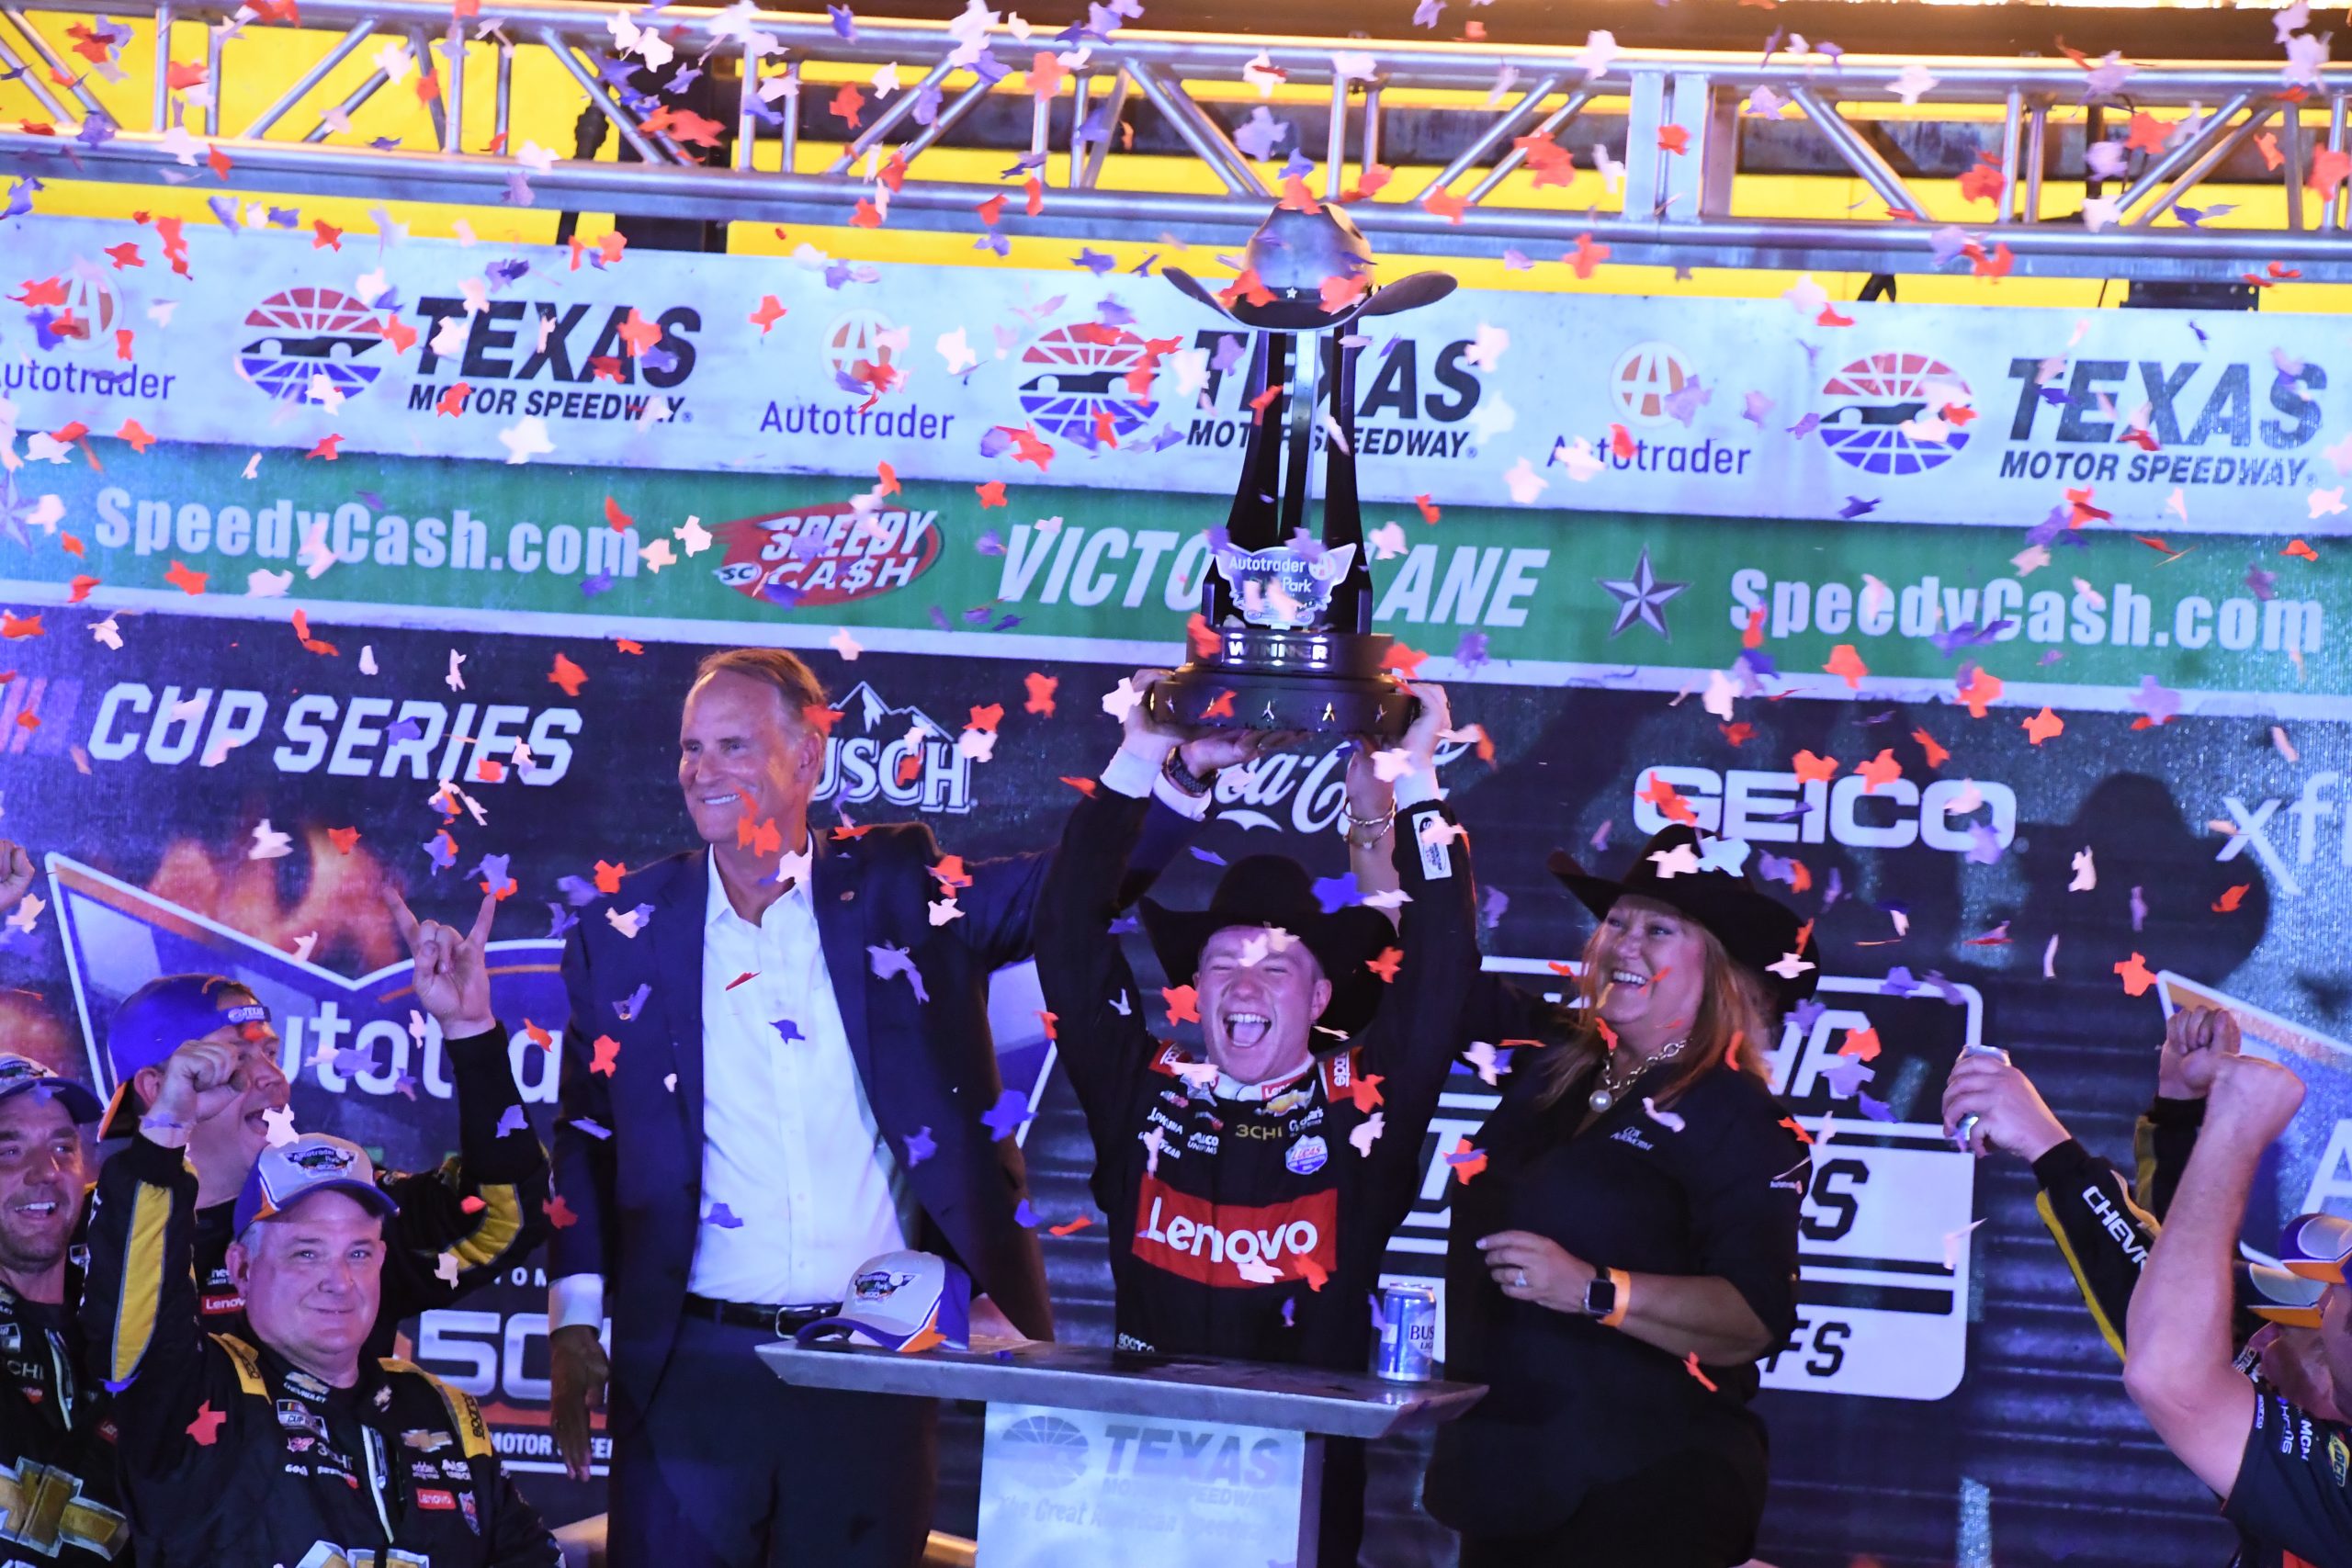 Tyler Reddick enjoys a Cup win, Texas Motor Speedway style. (Photo: Sean Folsom | The Podium Finish)